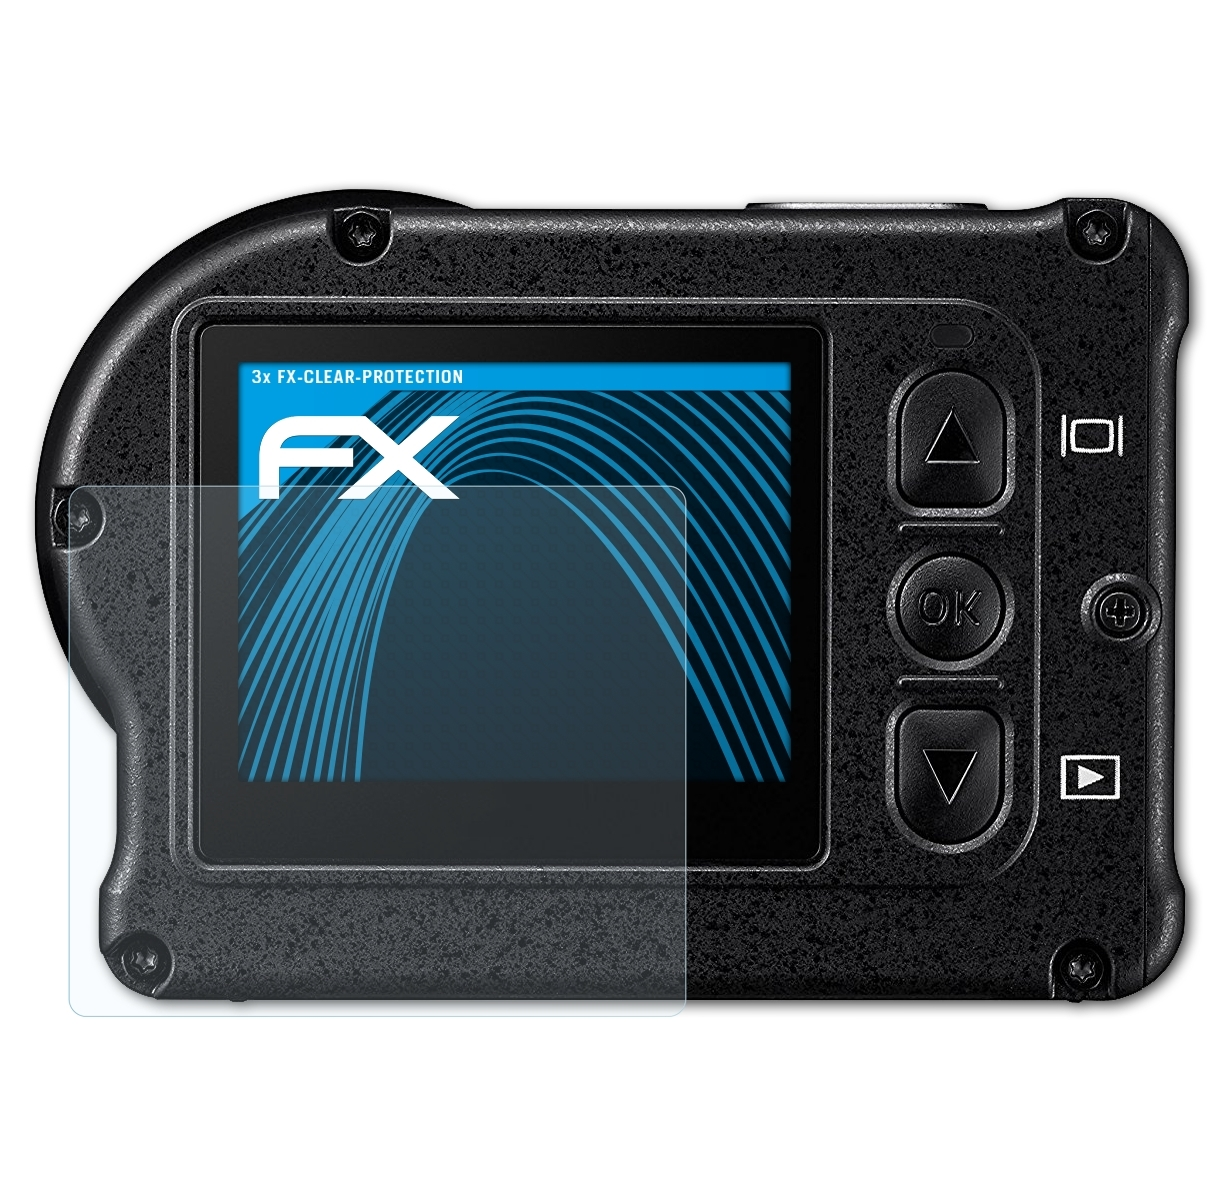 ATFOLIX 3x KeyMission 170) Displayschutz(für FX-Clear Nikon